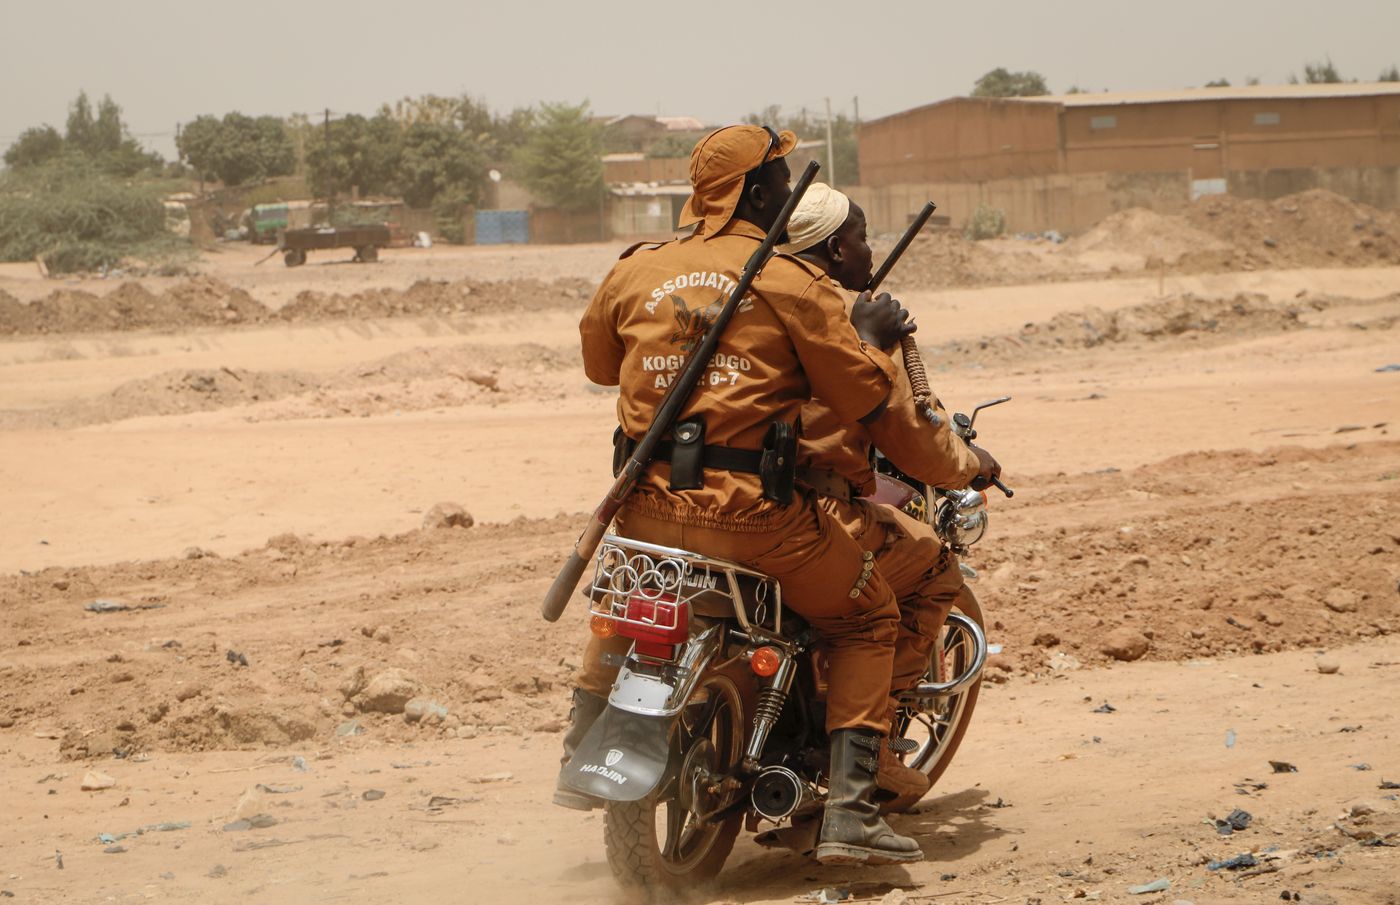 Local defence force volunteers ride on a motorbike through Ouagadougou, part of Burkina Faso